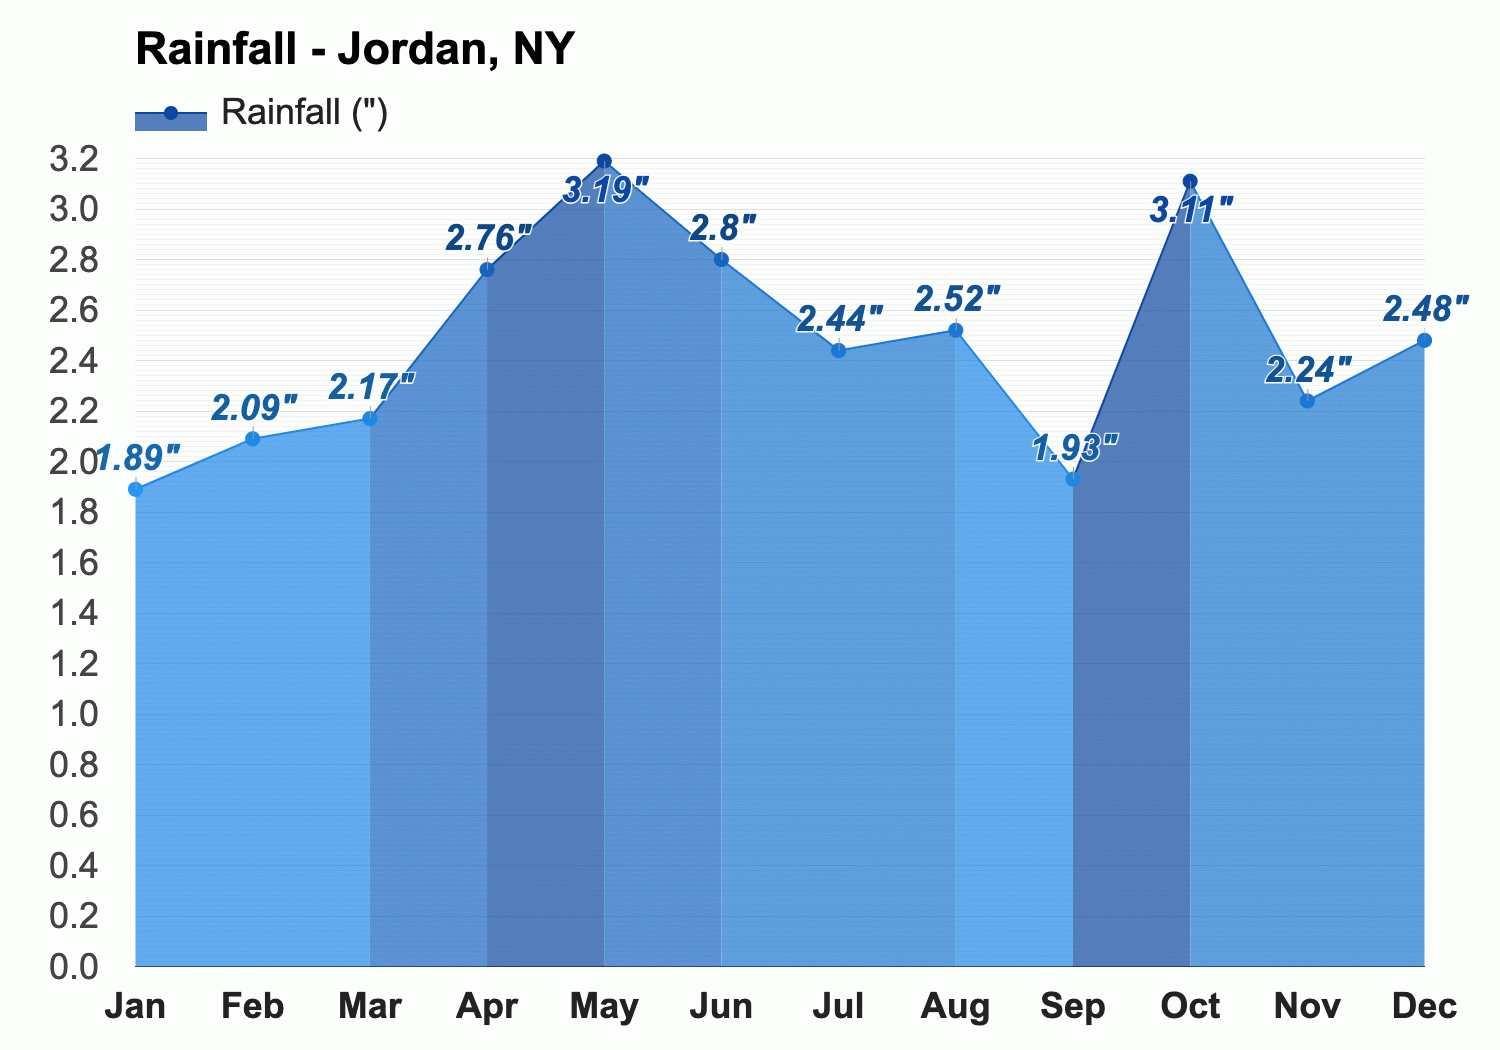 Jordan, NY September weather forecast information | Weather Atlas